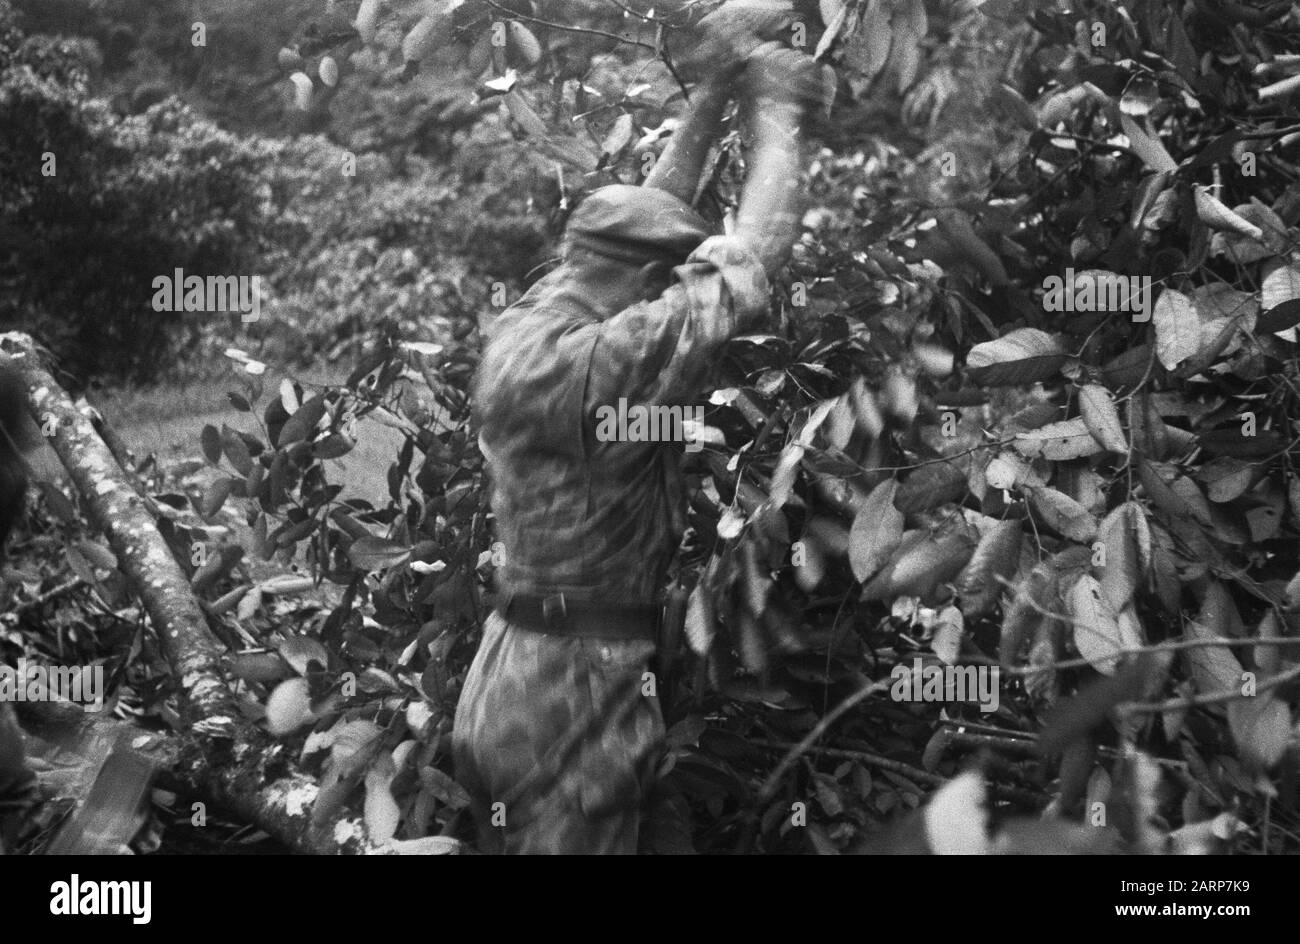 Loeboek Pakem en Baoengan  [a patrol stumbles upon a chopped tree as a roadblock} Date: 29 July 1948 Location: Indonesia, Dutch East Indies, Sumatra Stock Photo